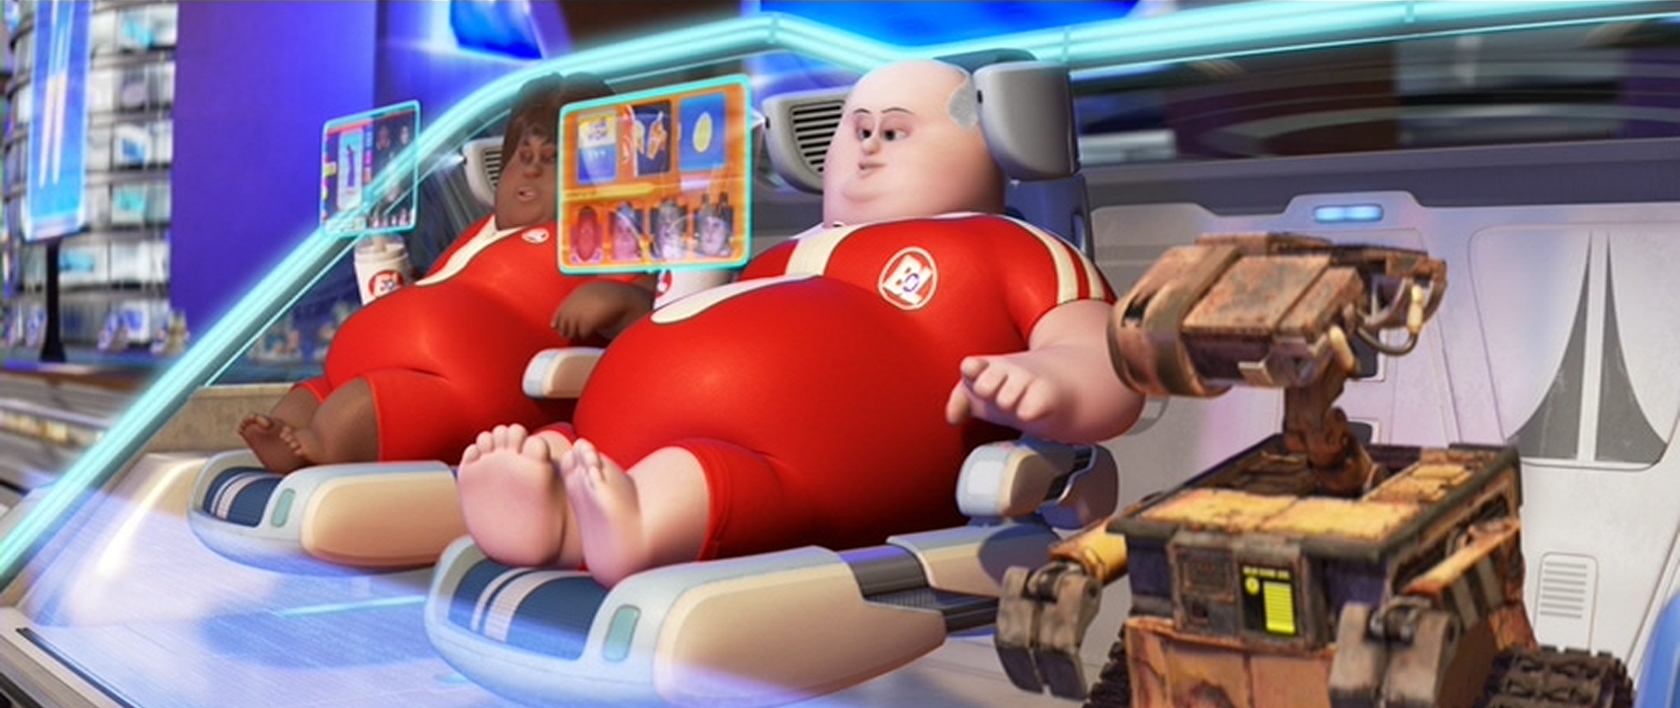 Screenshot from the Disney-Pixar movie WALL-E.